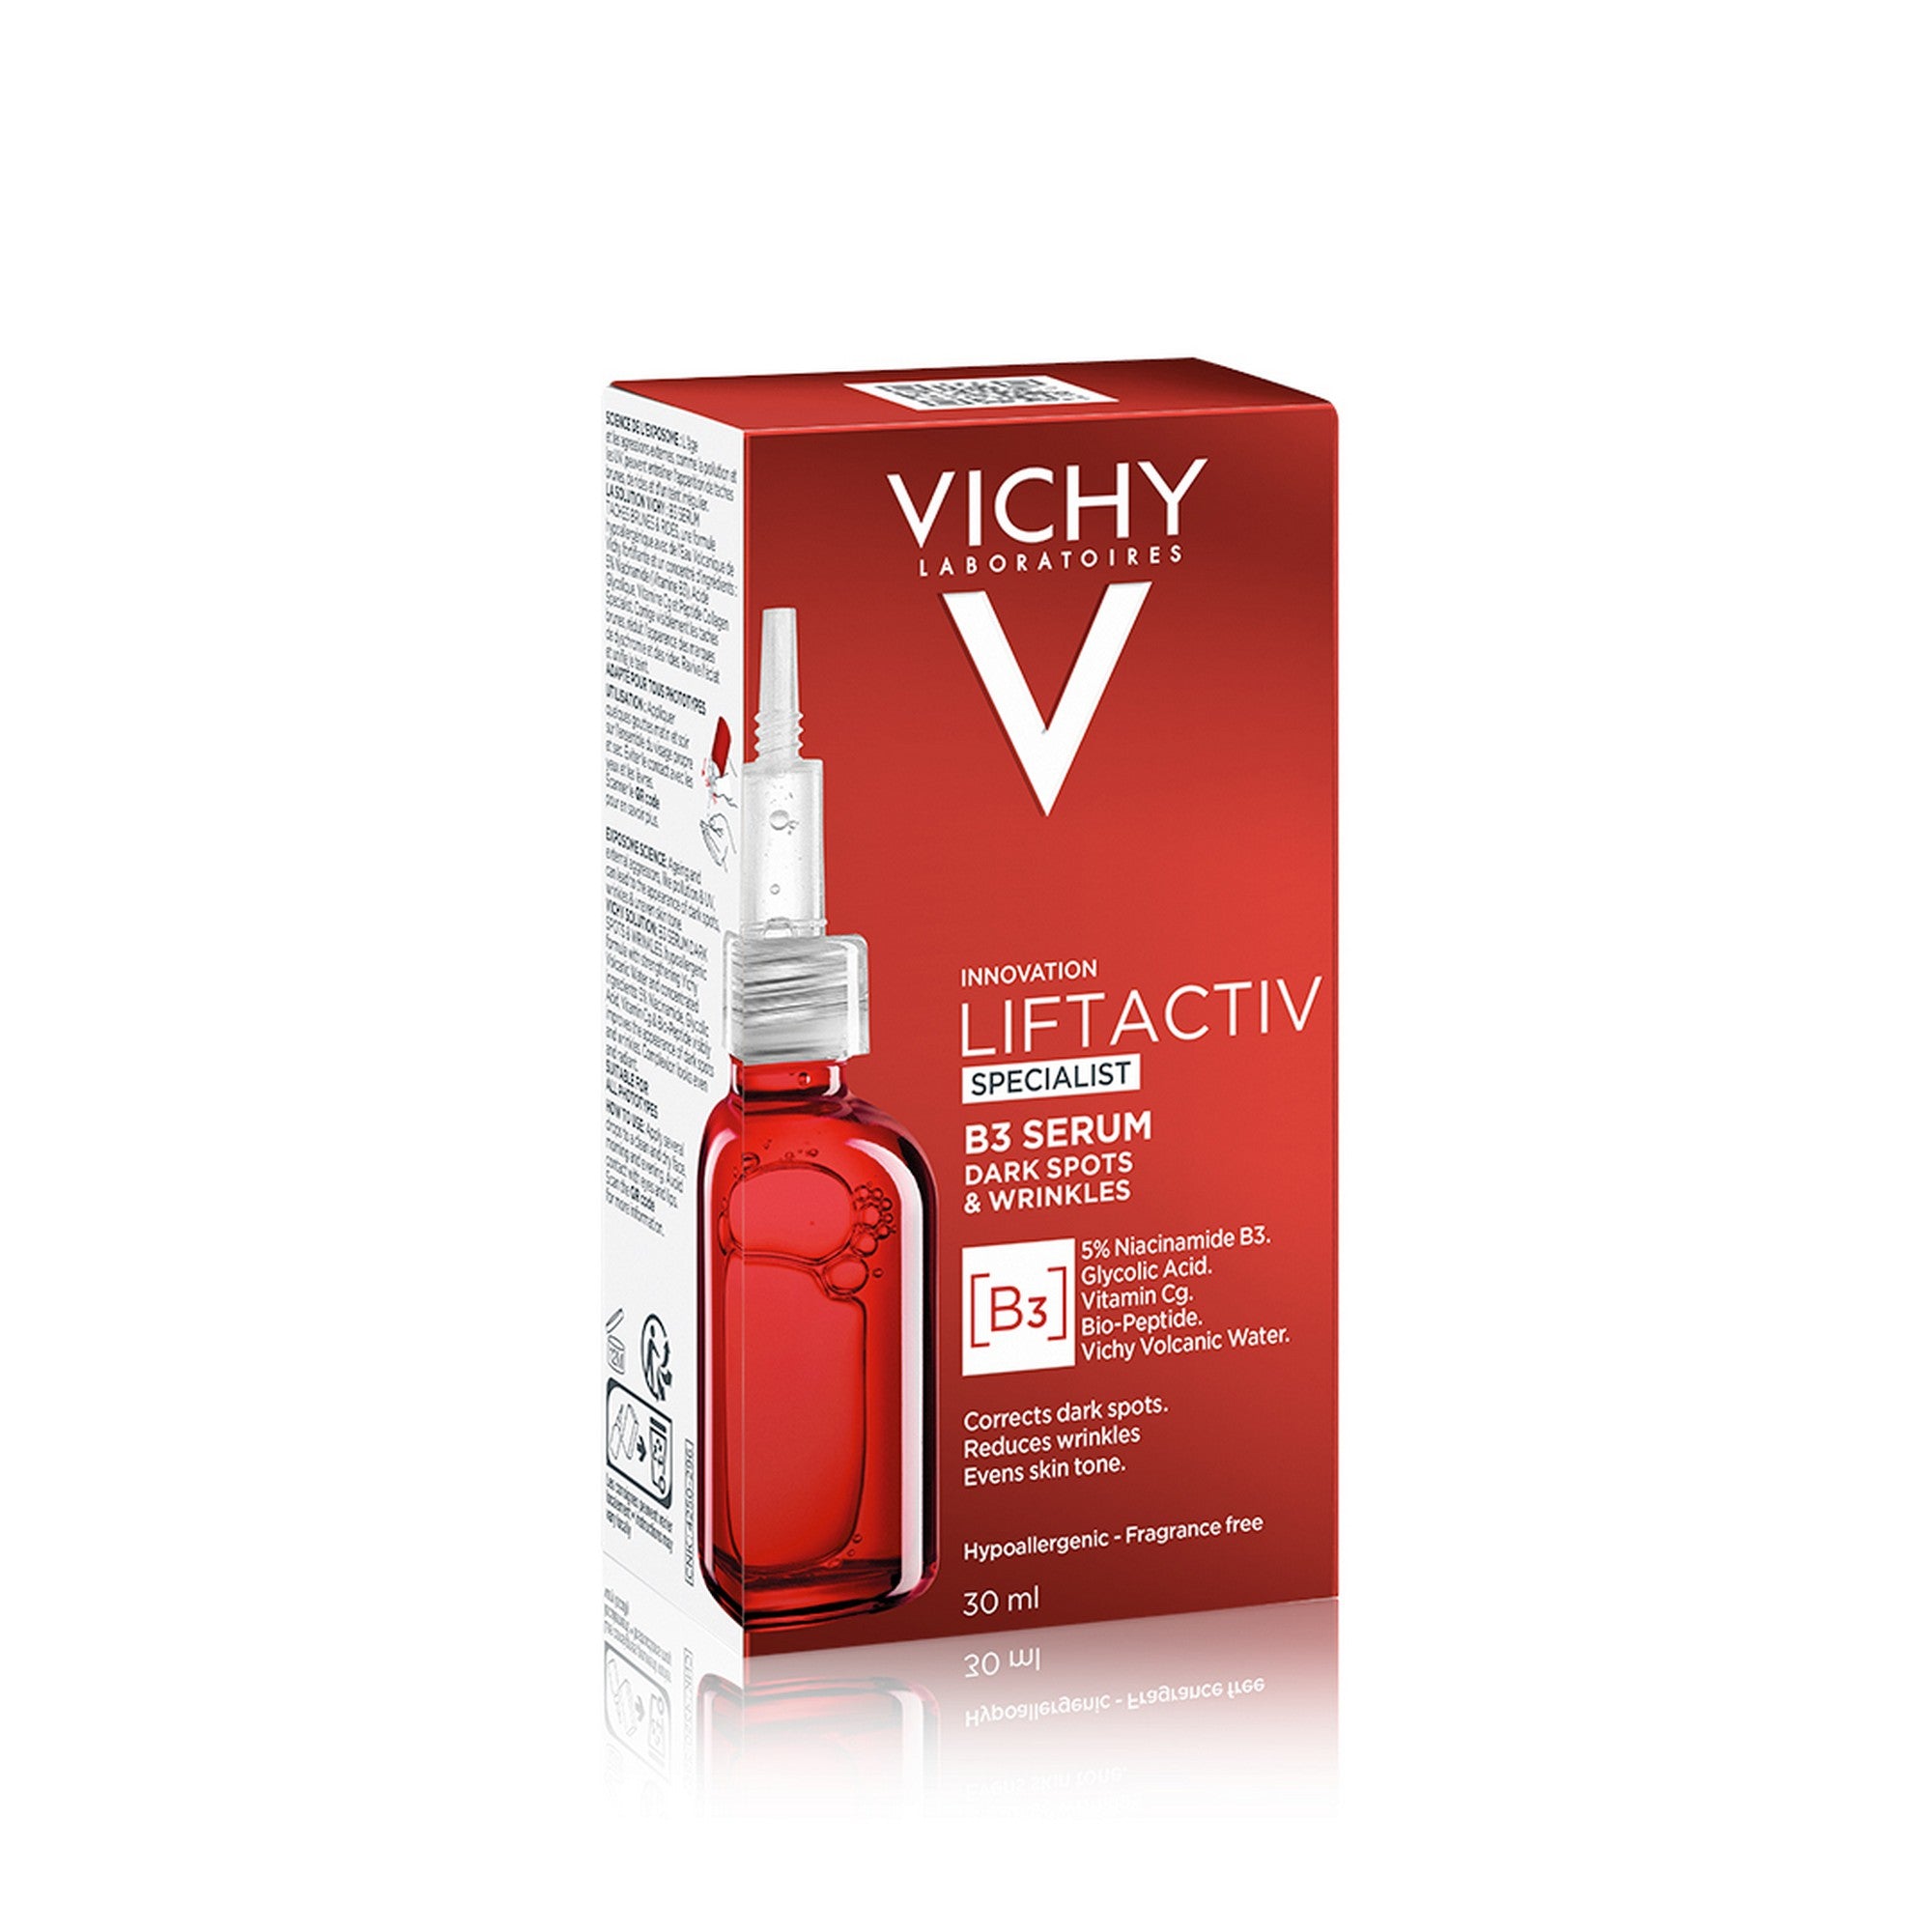 Vichy Liftactiv Specialist B3 Serum 30ml Packshot 2